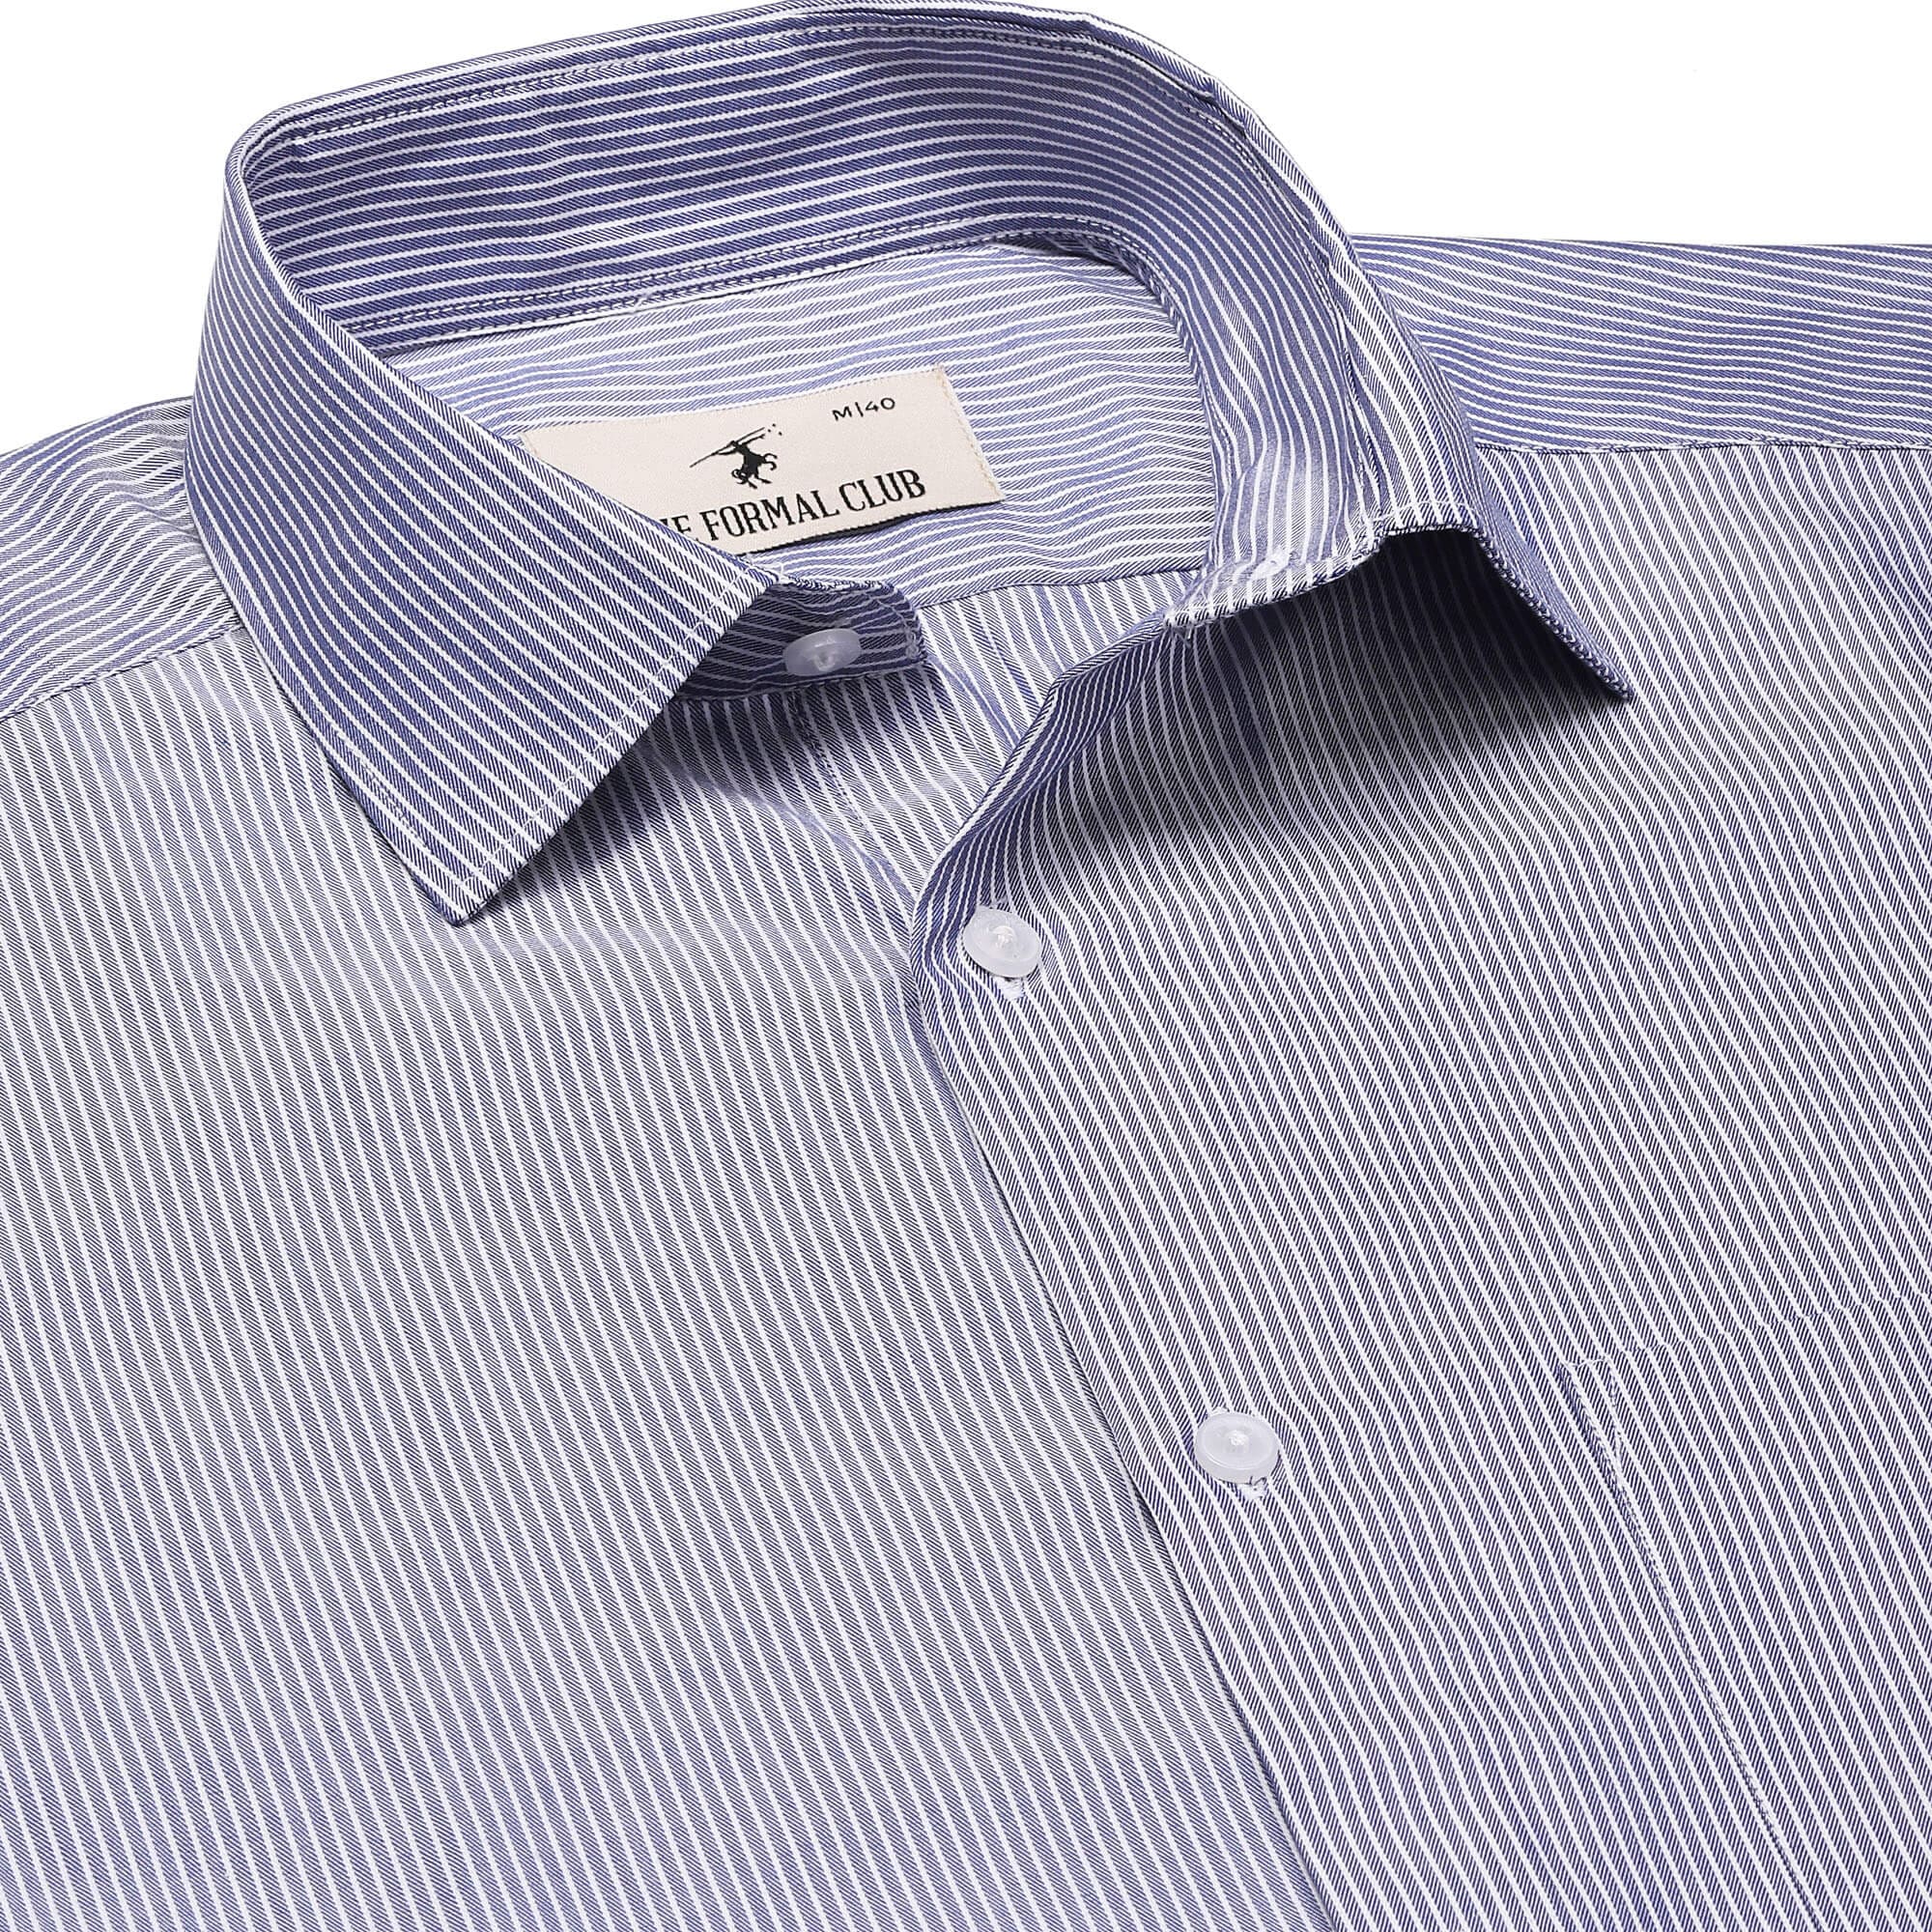 Eclipse Twill Stripe Shirt In Blue Slim Fit - The Formal Club